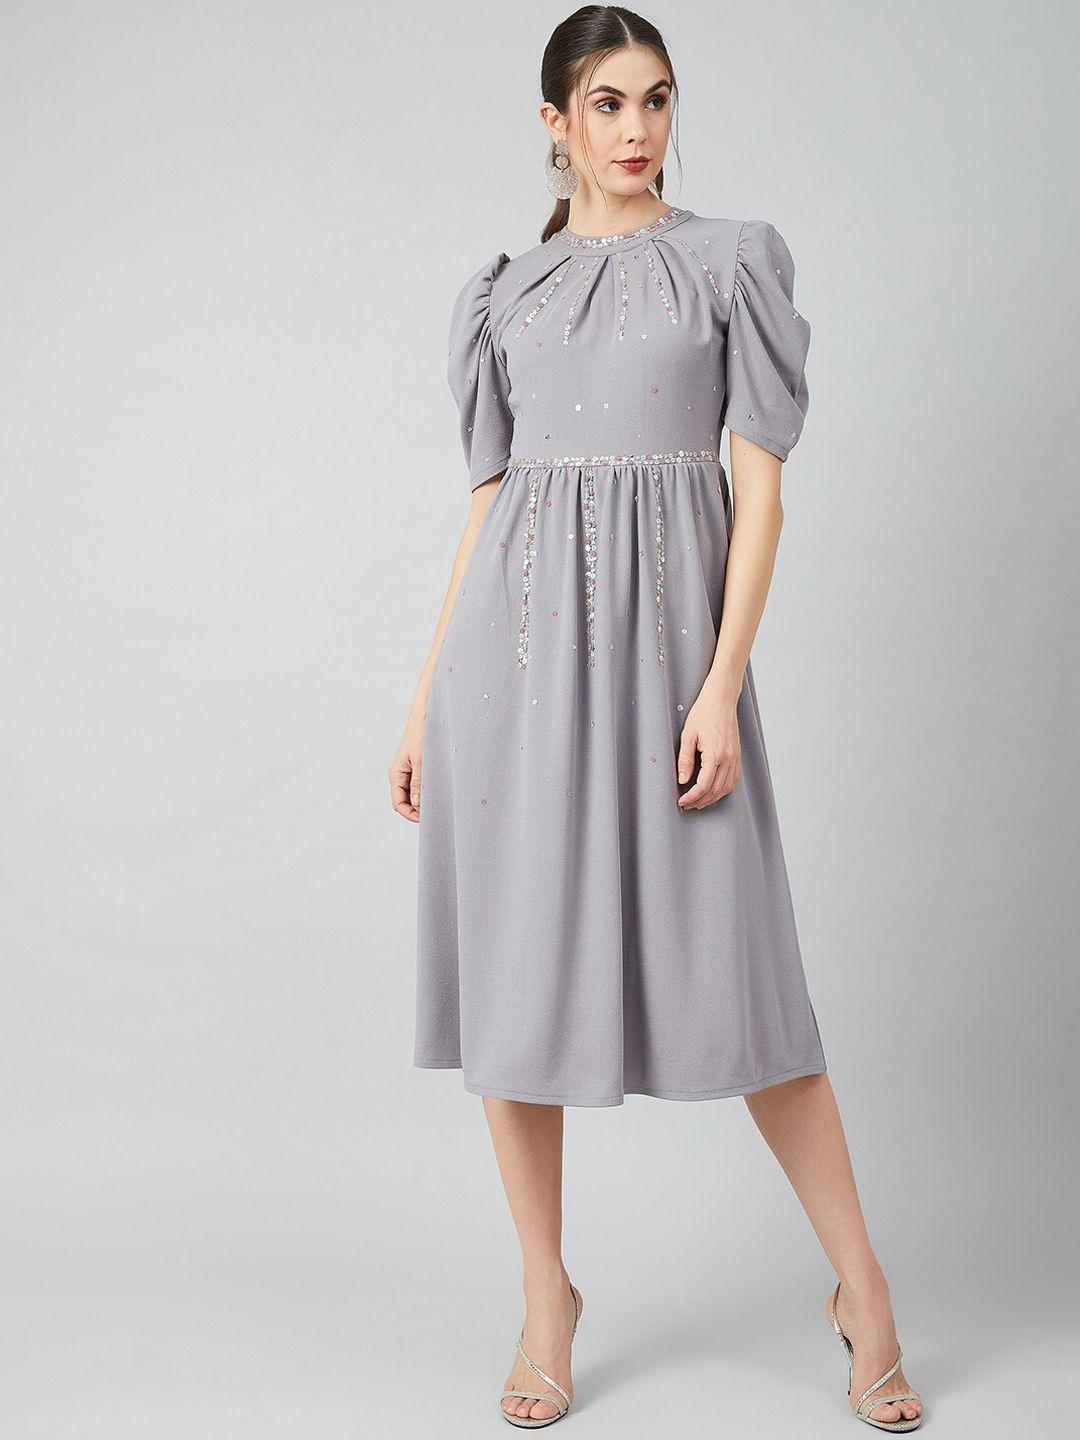 athena grey embellished fit and flare dress